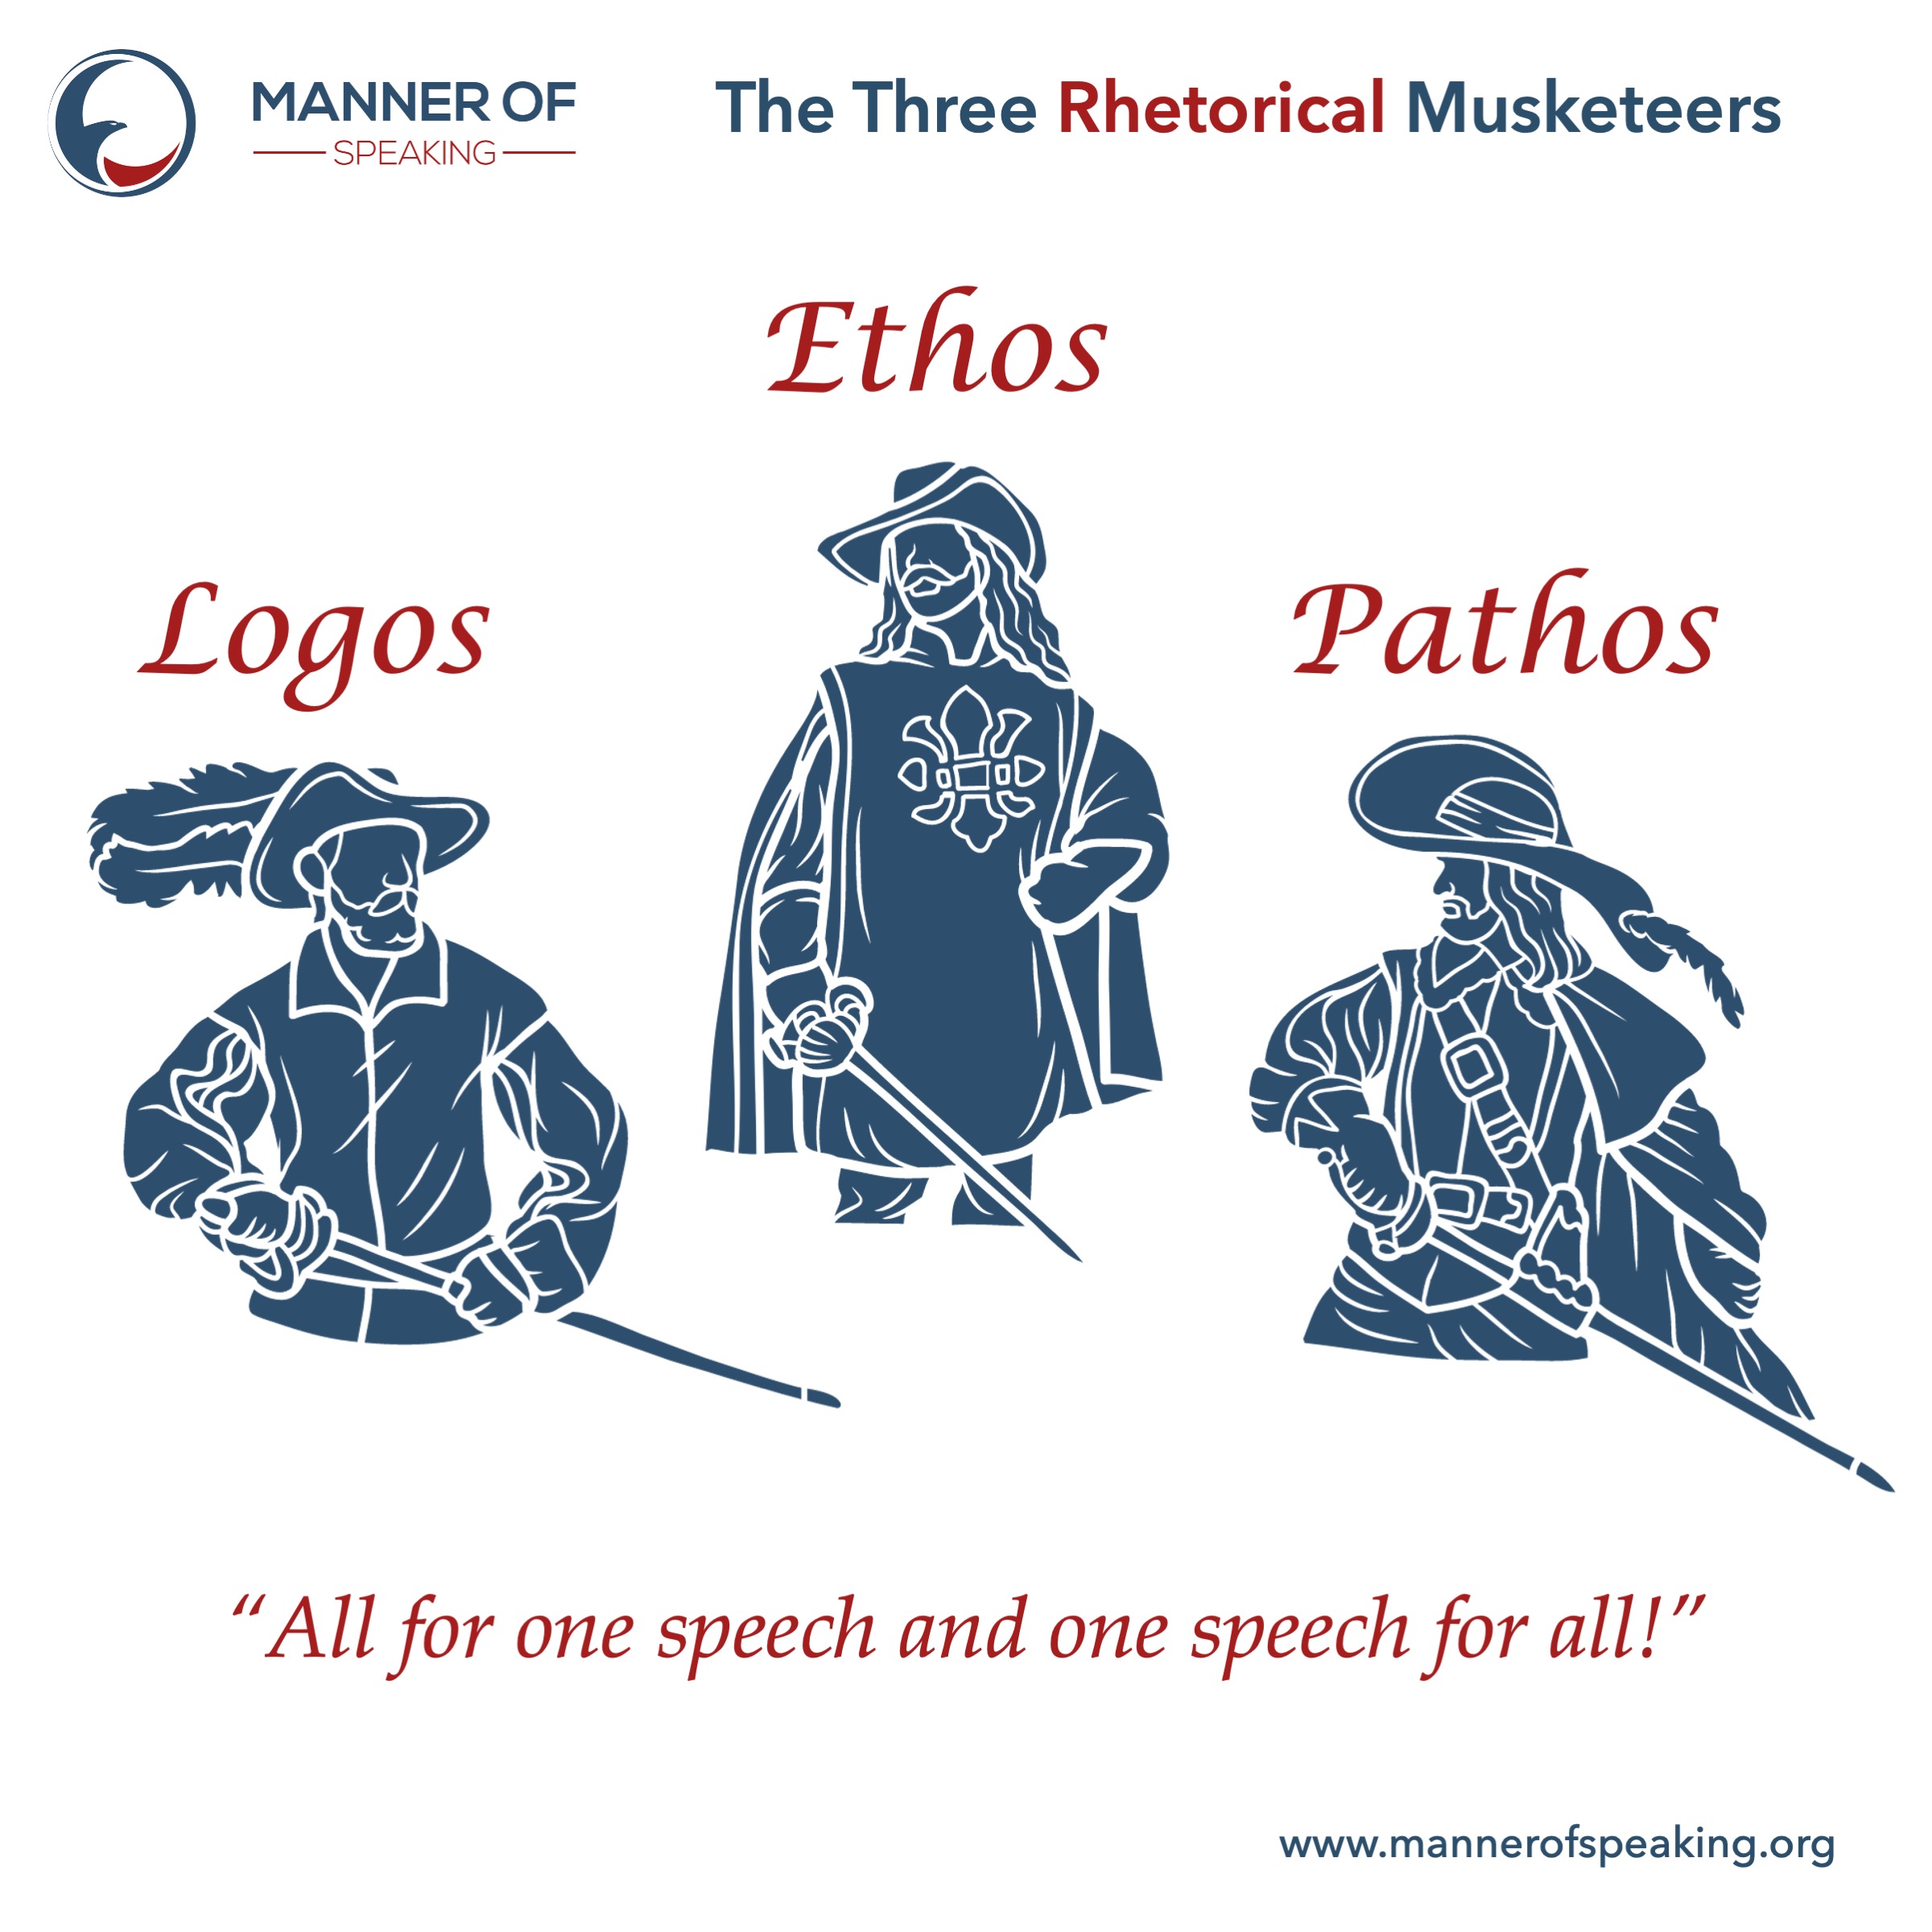 The Three Rhetorical Museketeers